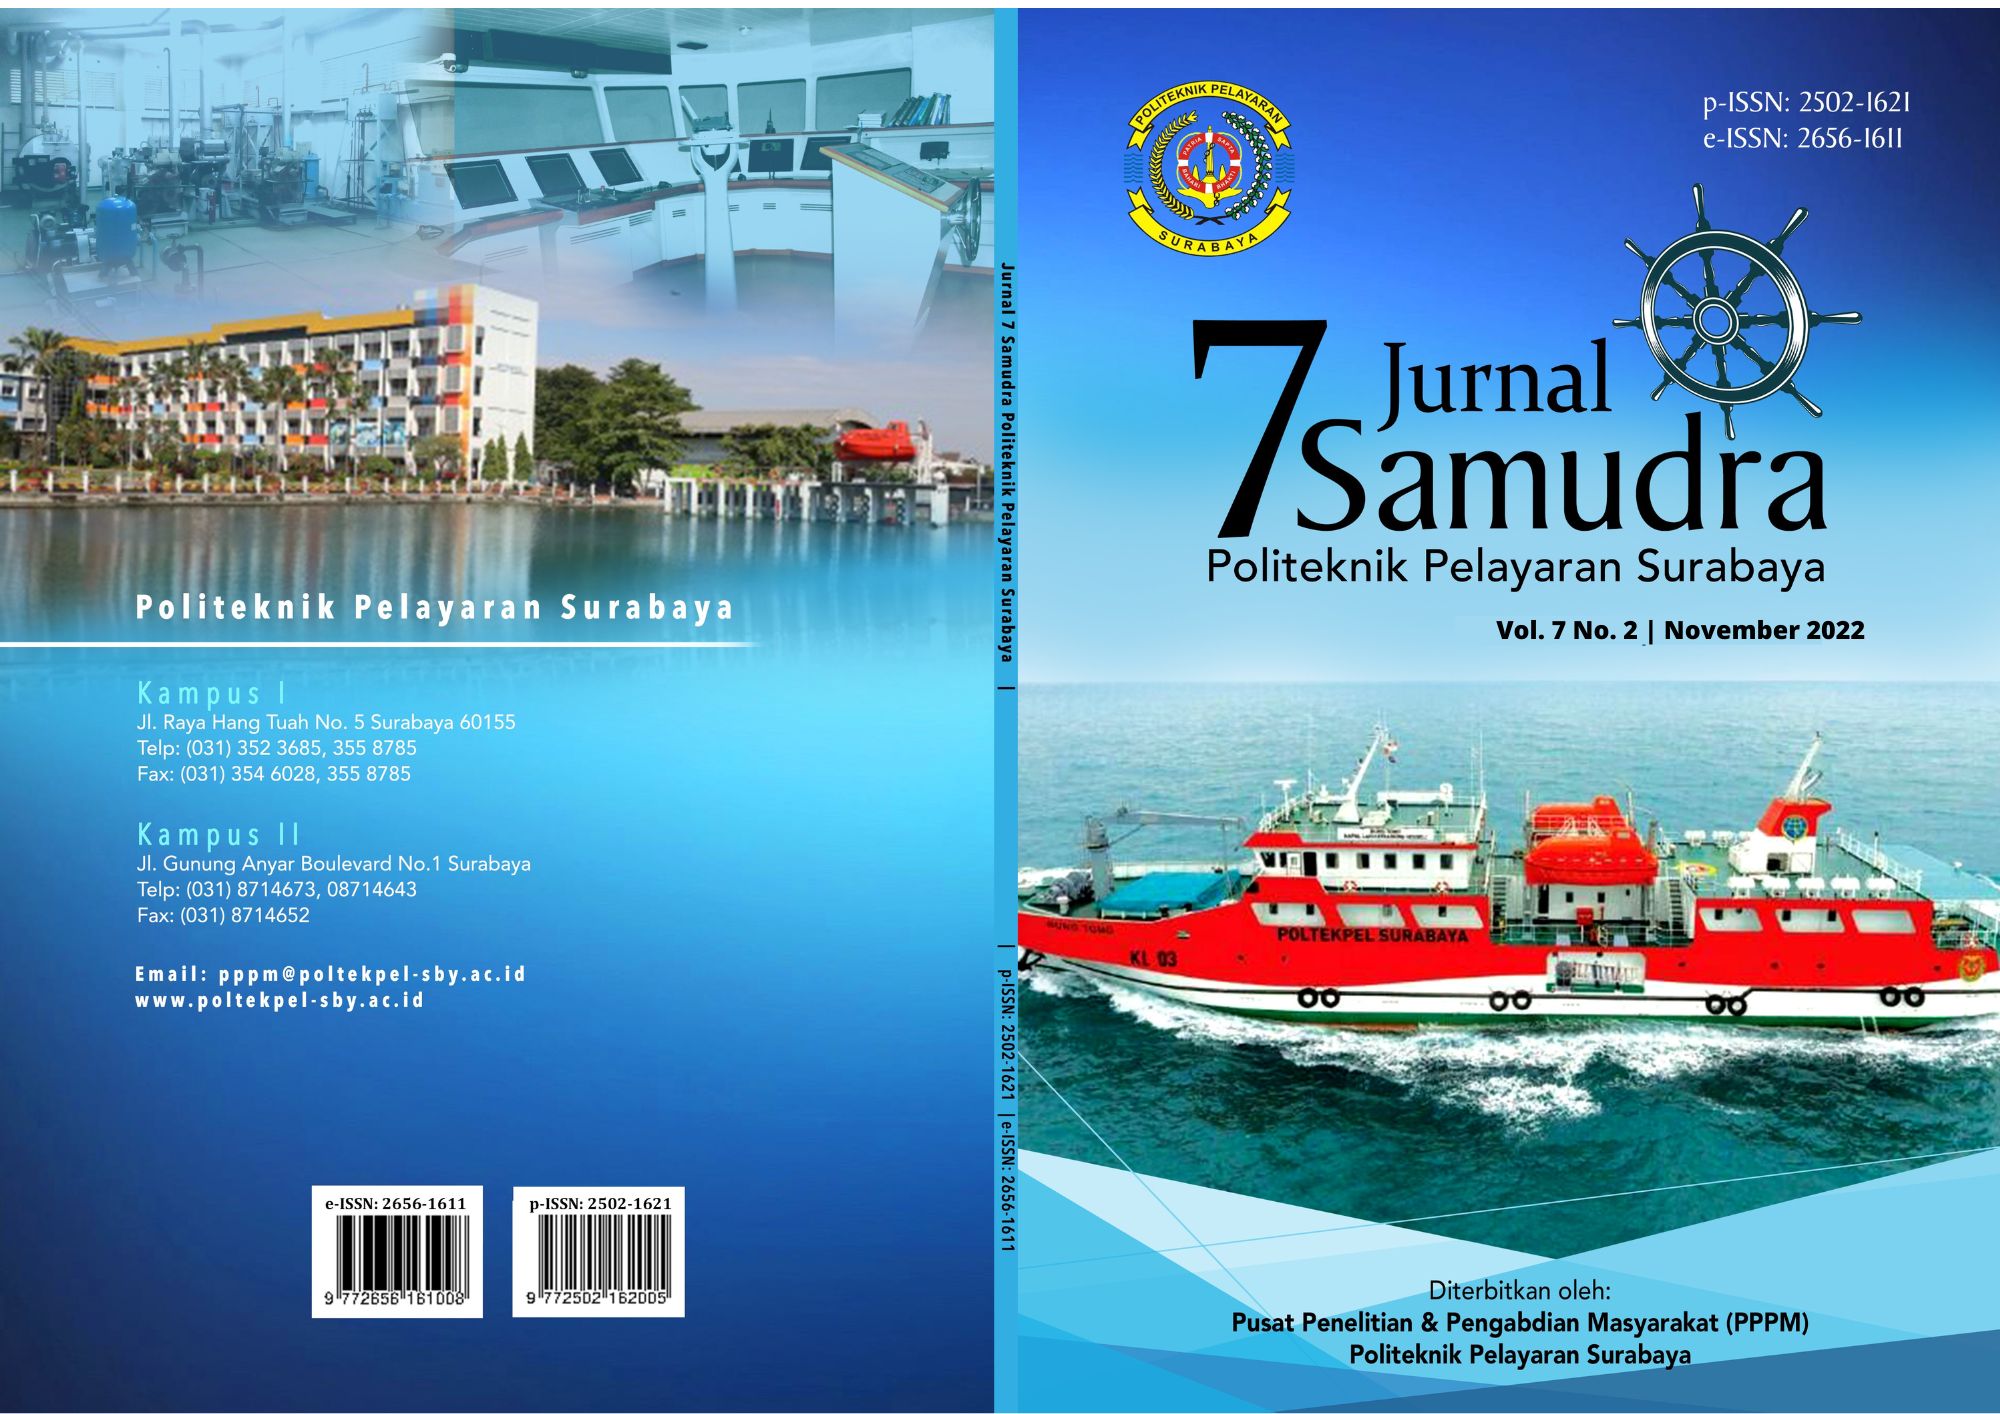 					View Vol. 7 No. 2 (2022): Jurnal 7 Samudra
				